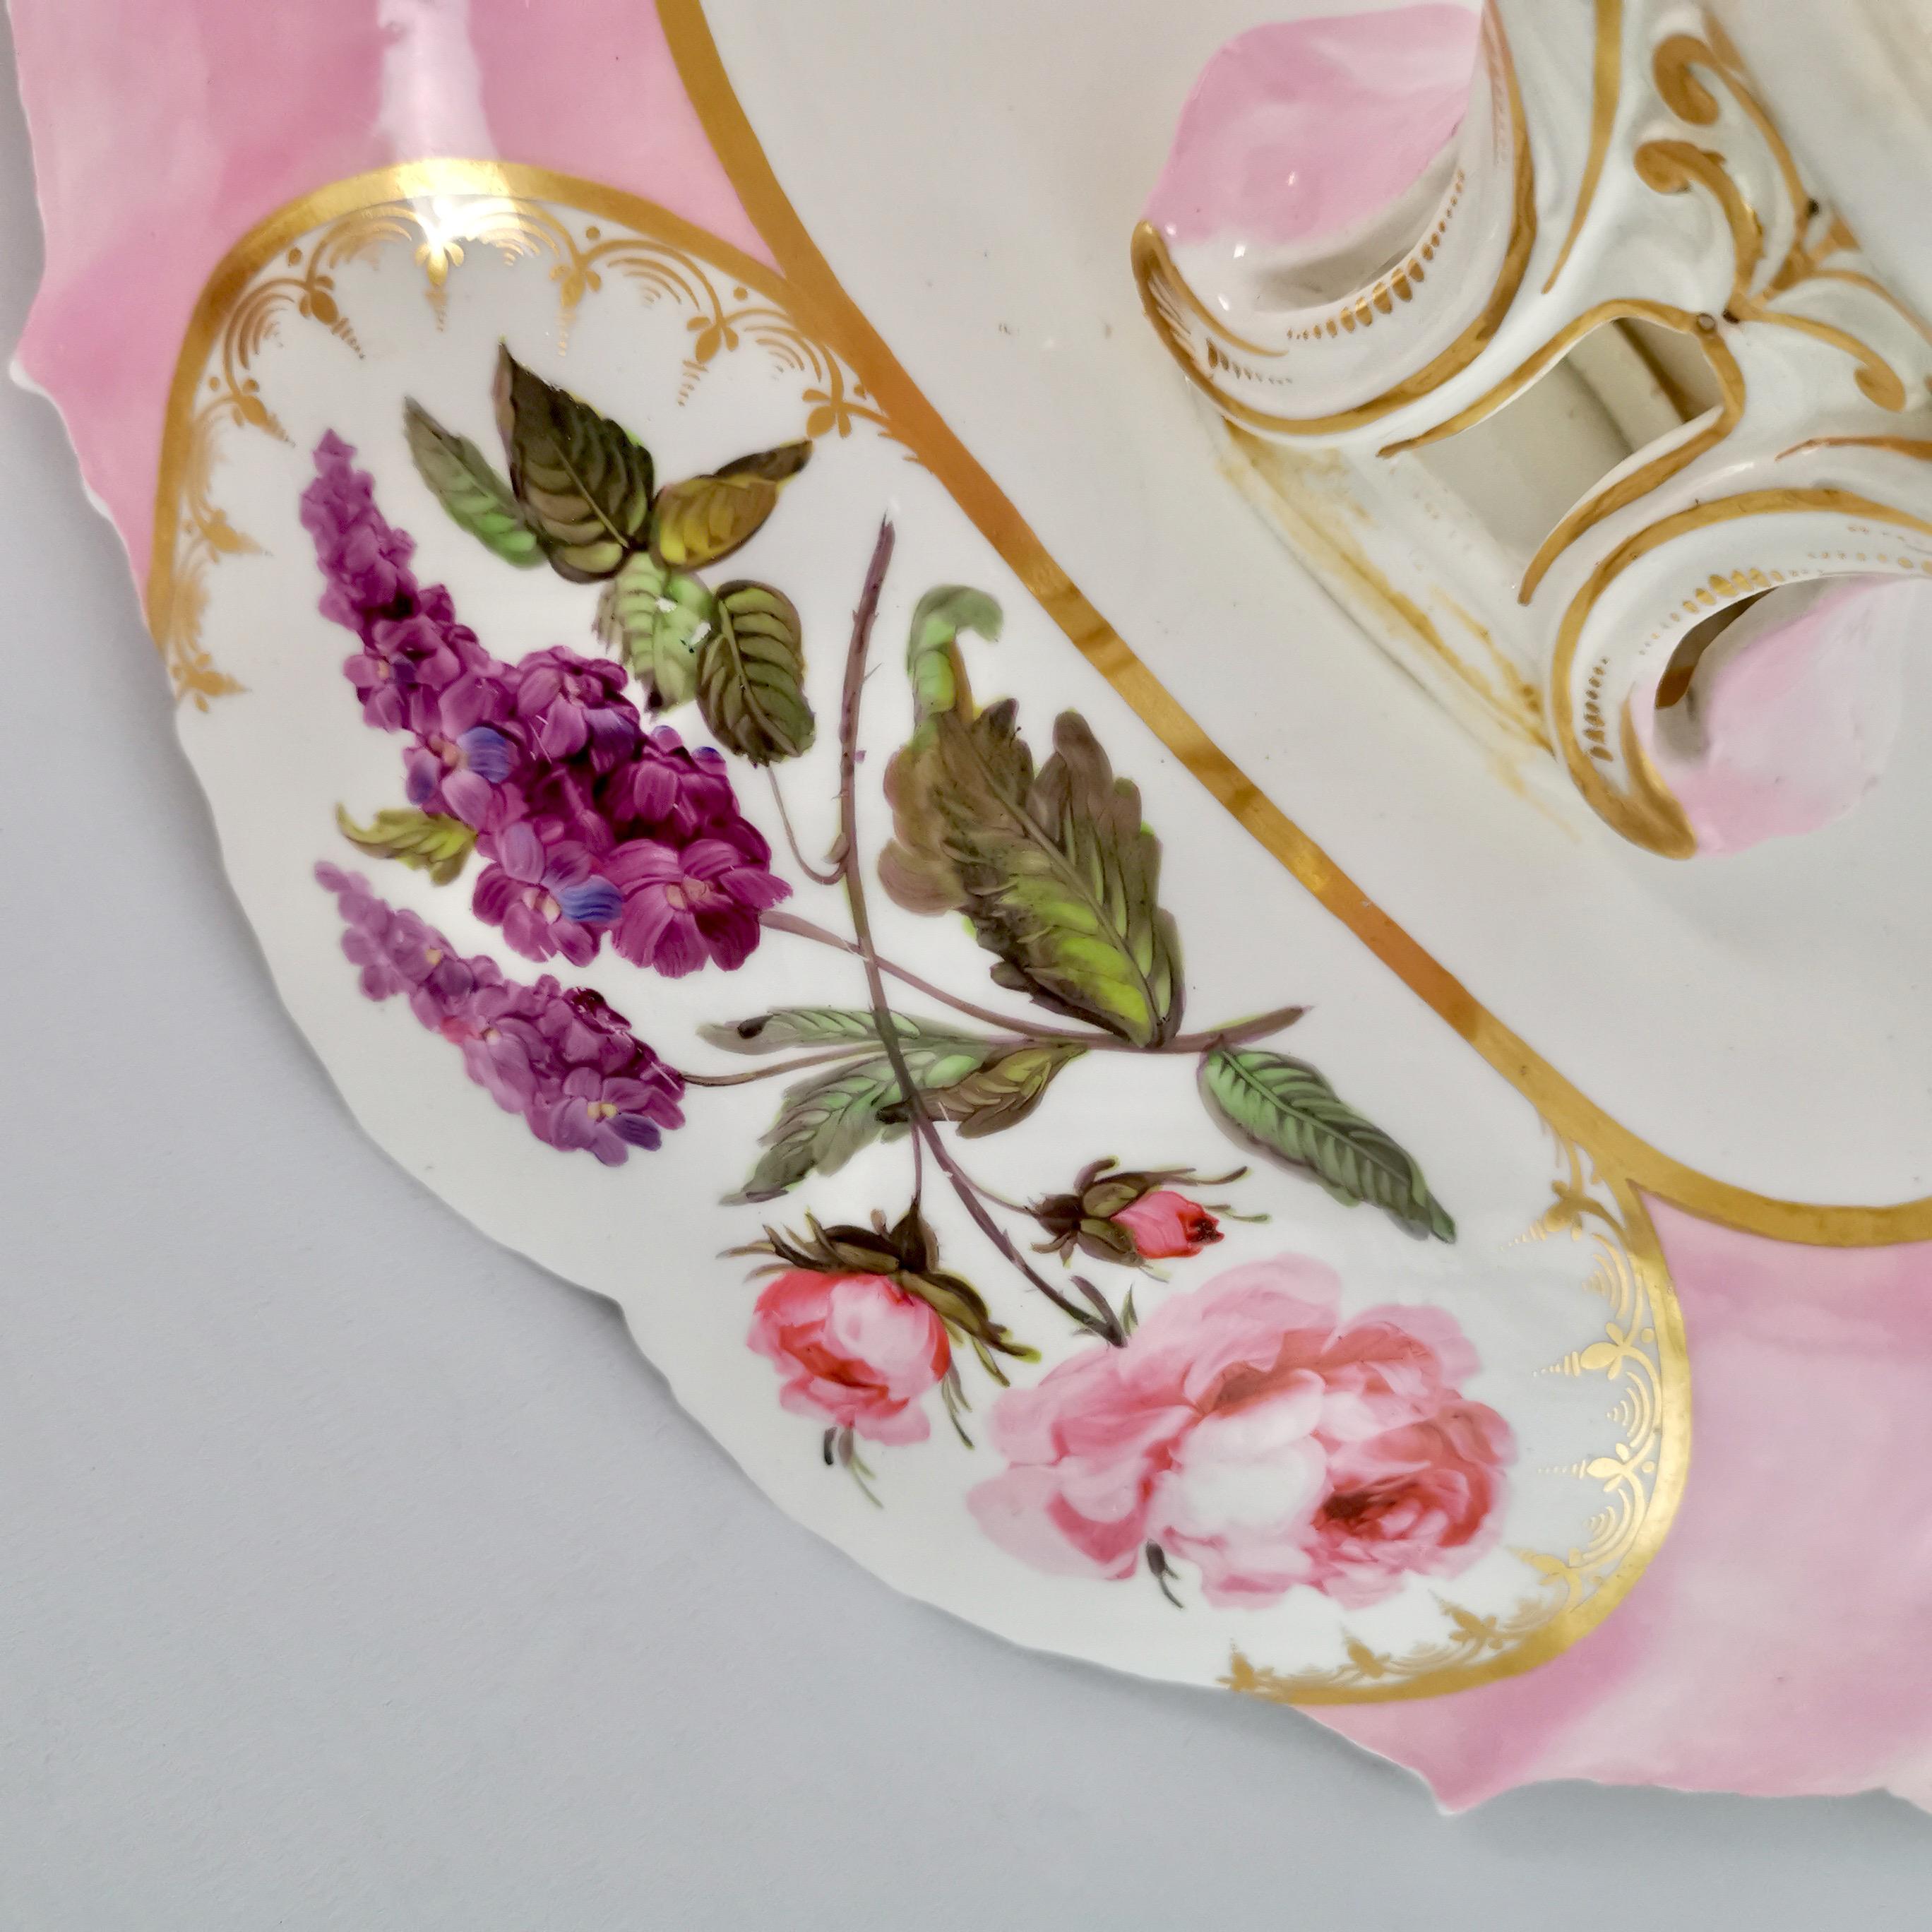 Hand-Painted Coalport Porcelain Dessert Service, Pink with Flowers, Regency 1820-1825